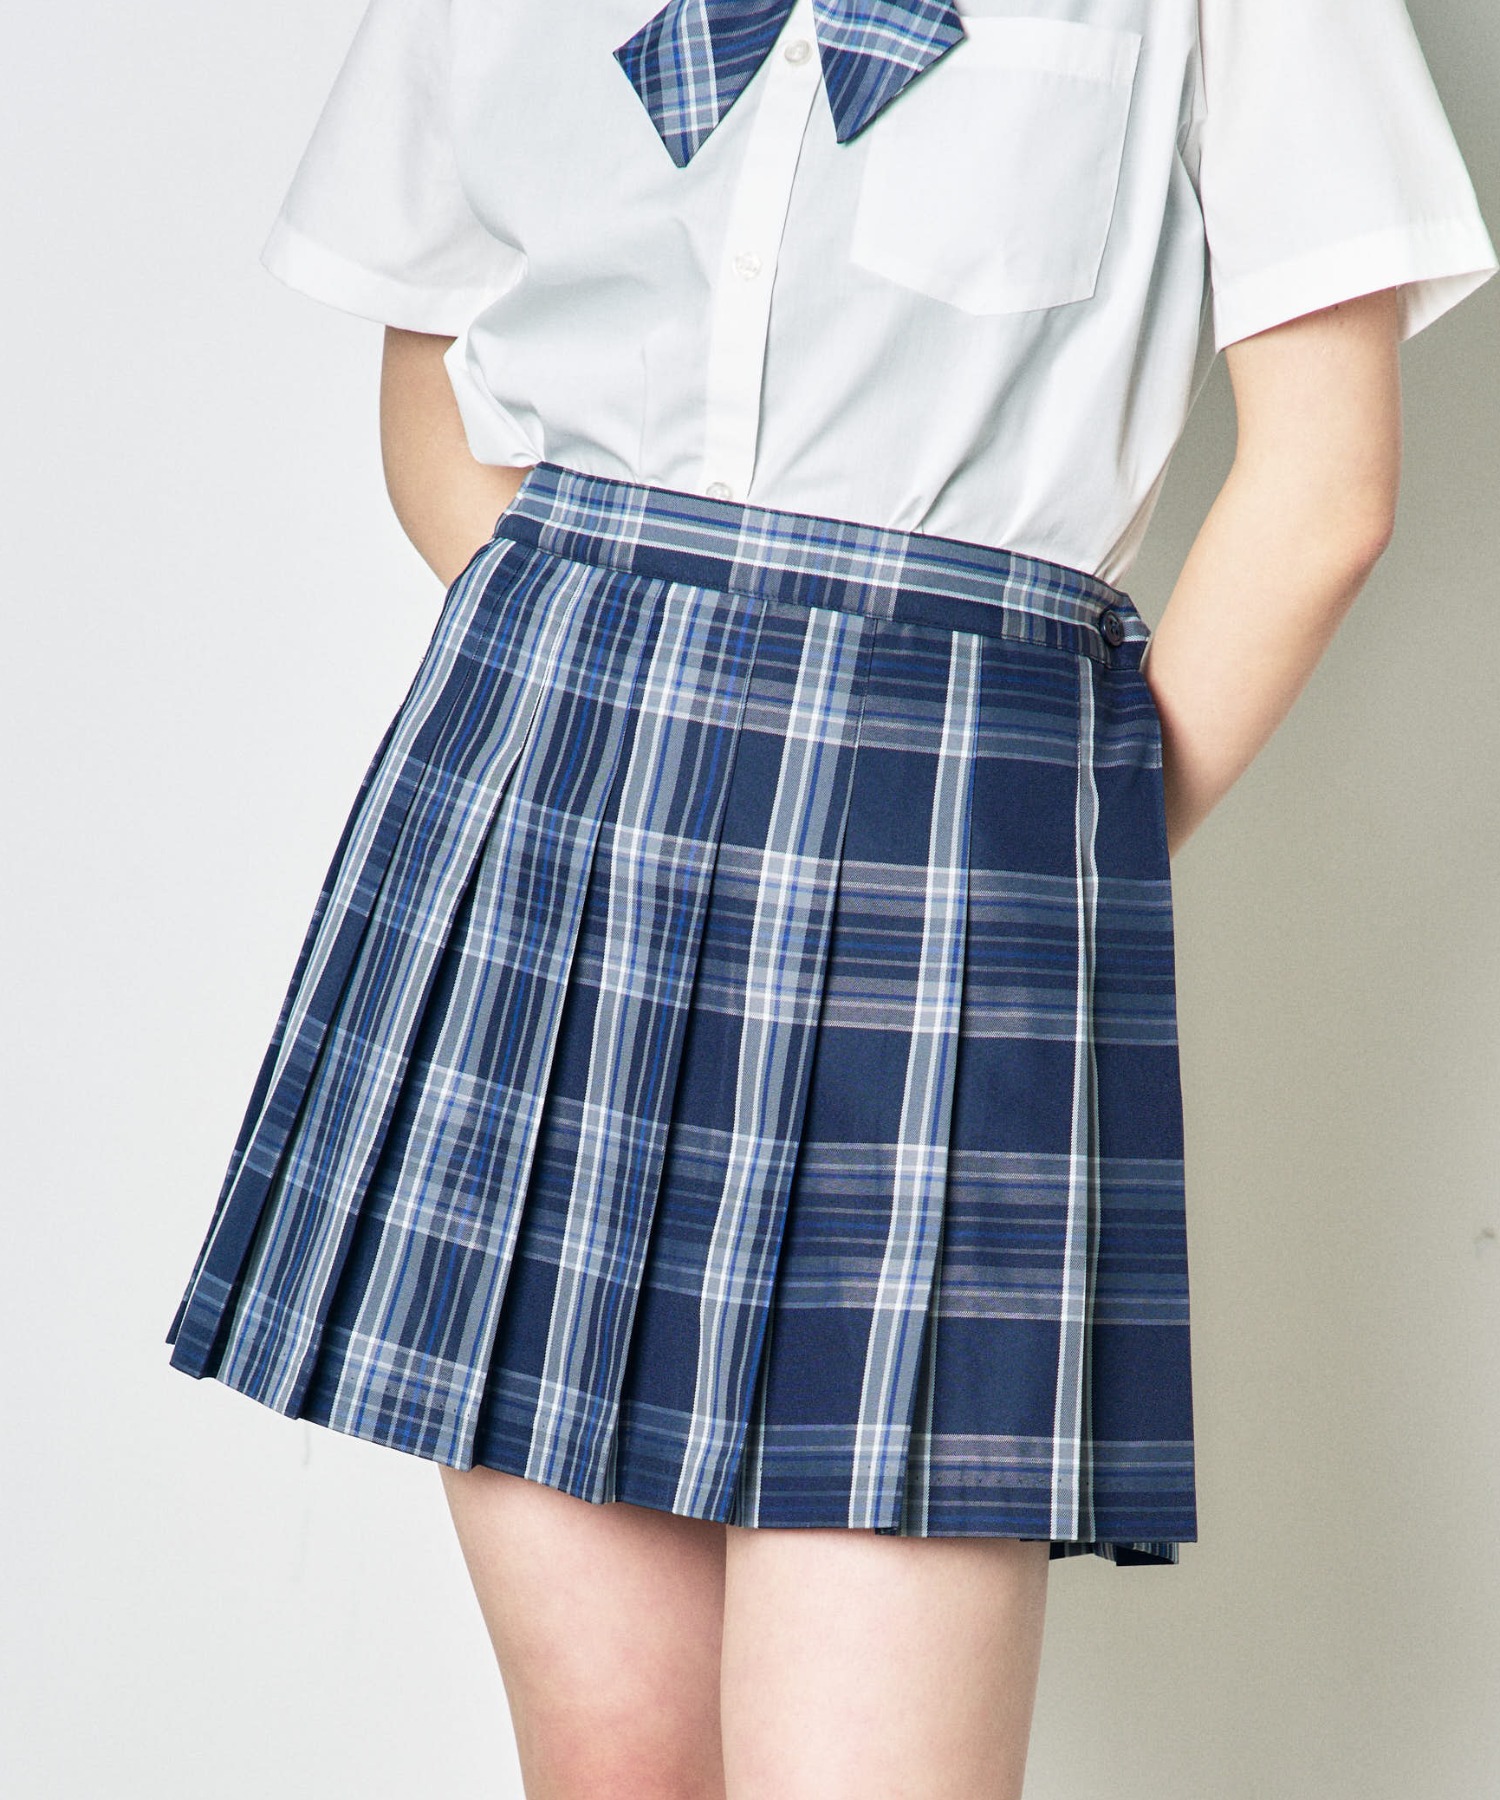 Amazon.co.jp: 女子スクールスカート